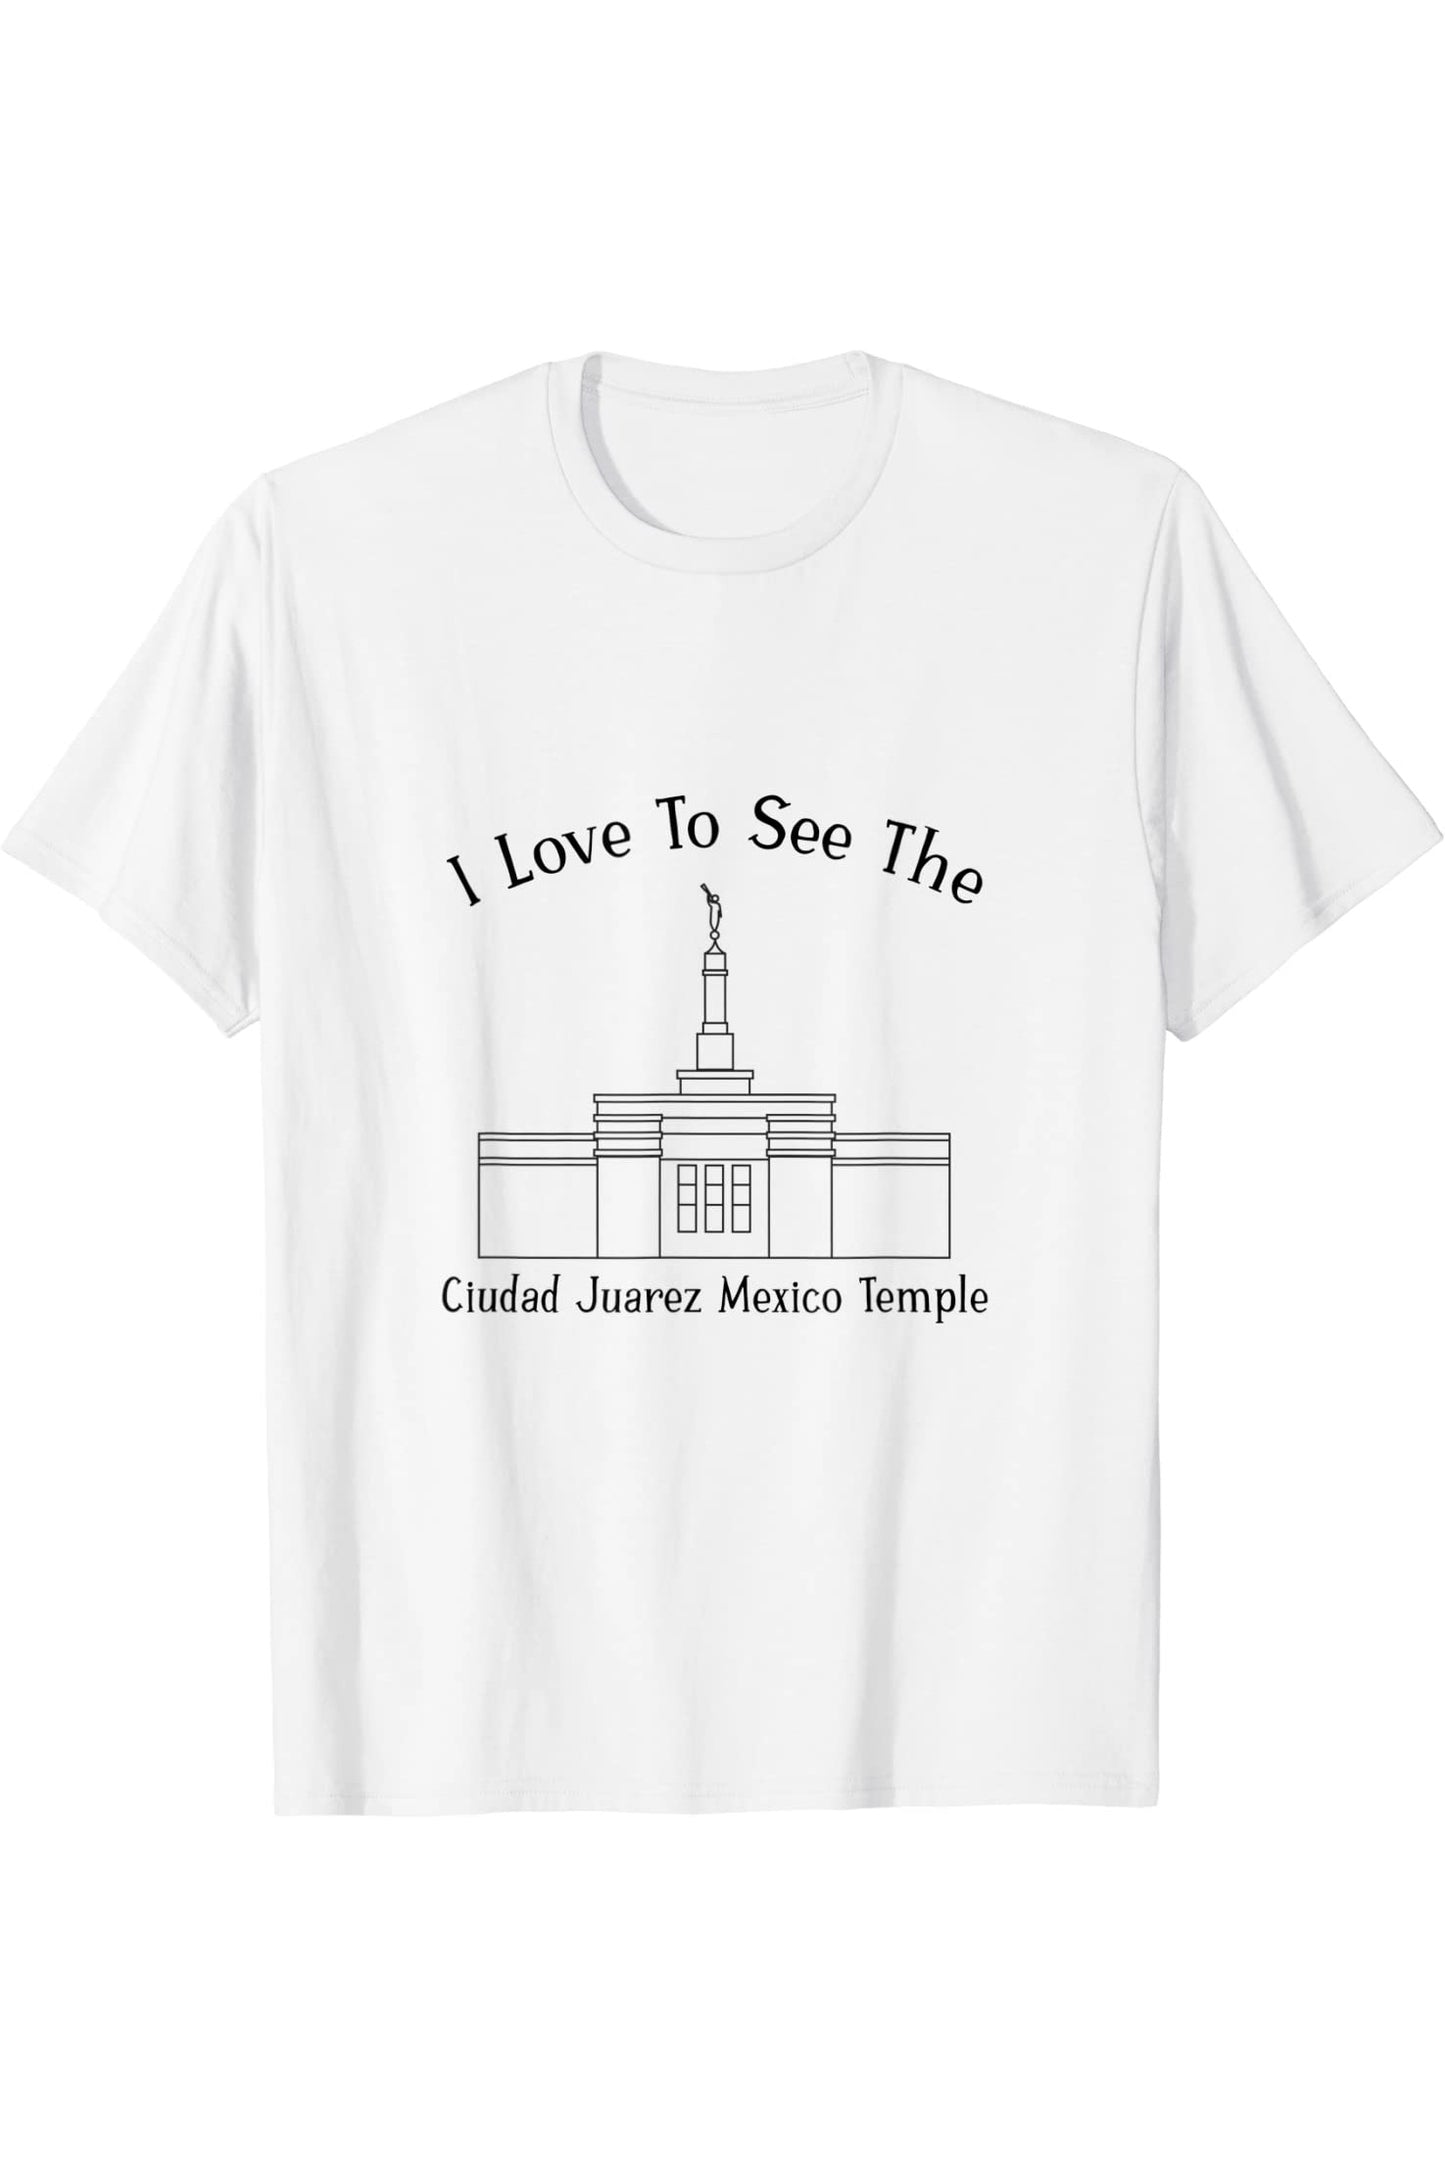 Ciudad Juarez Mexico Temple T-Shirt -  Style (English) US